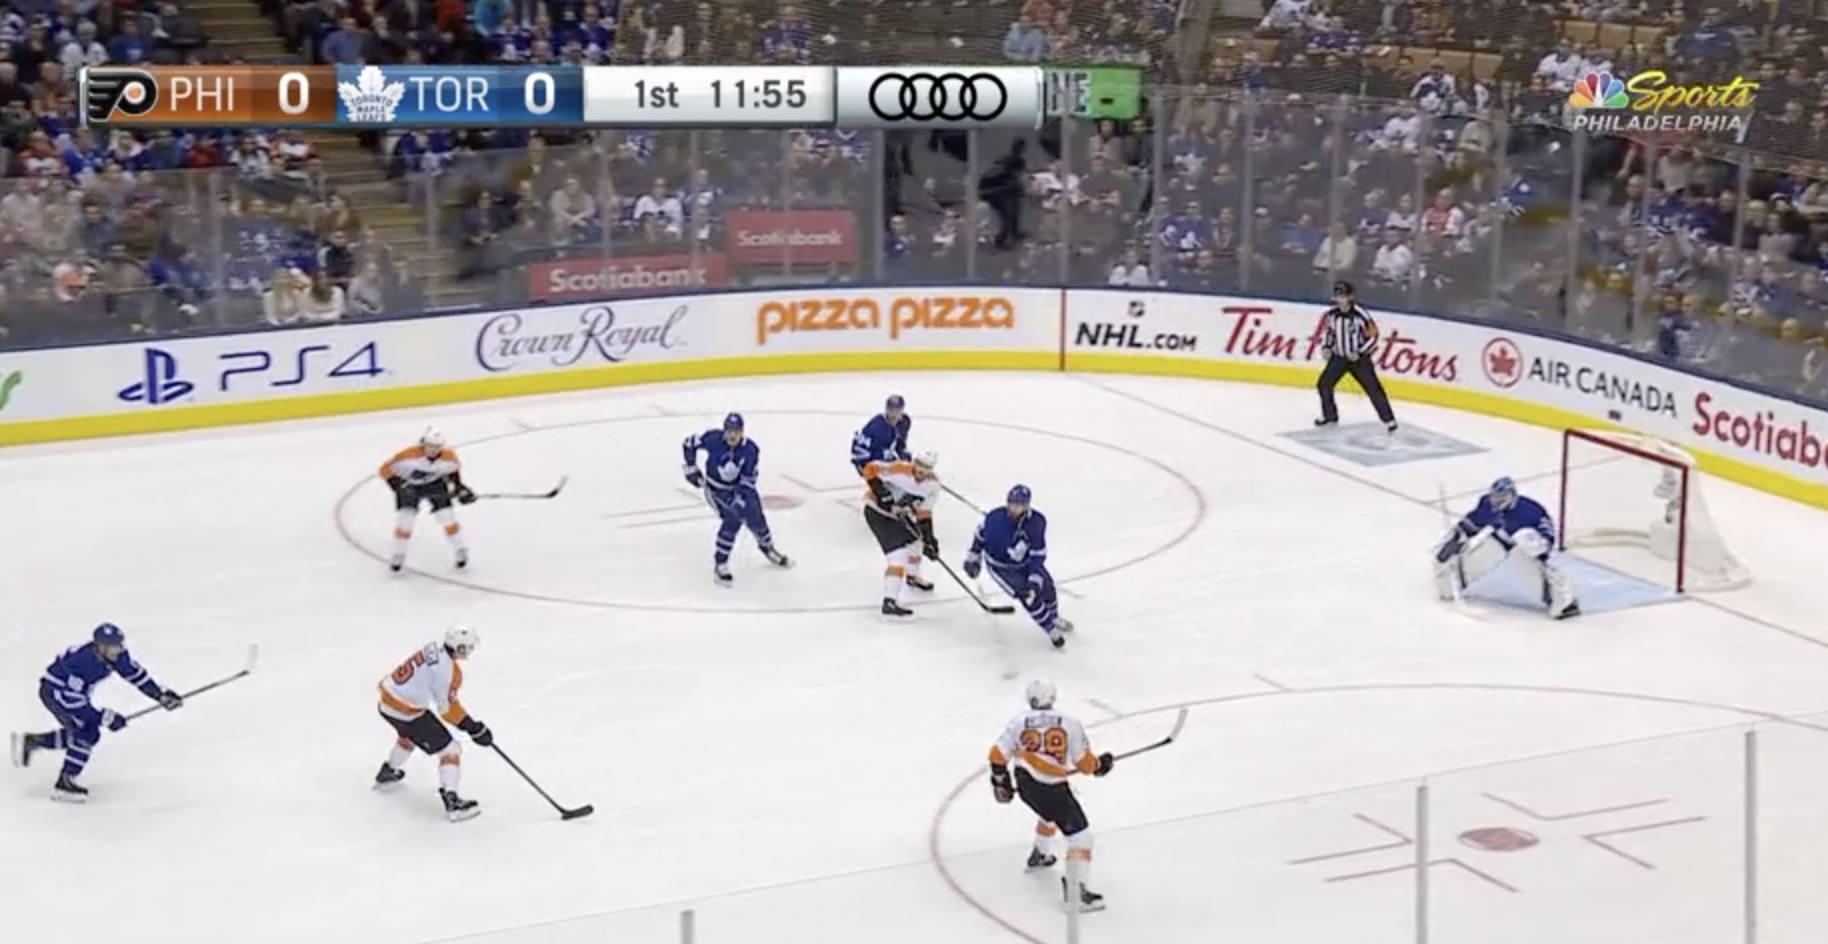 Toronto Maple Leafs vs. Philadelphia Flyers, bad coverage 3